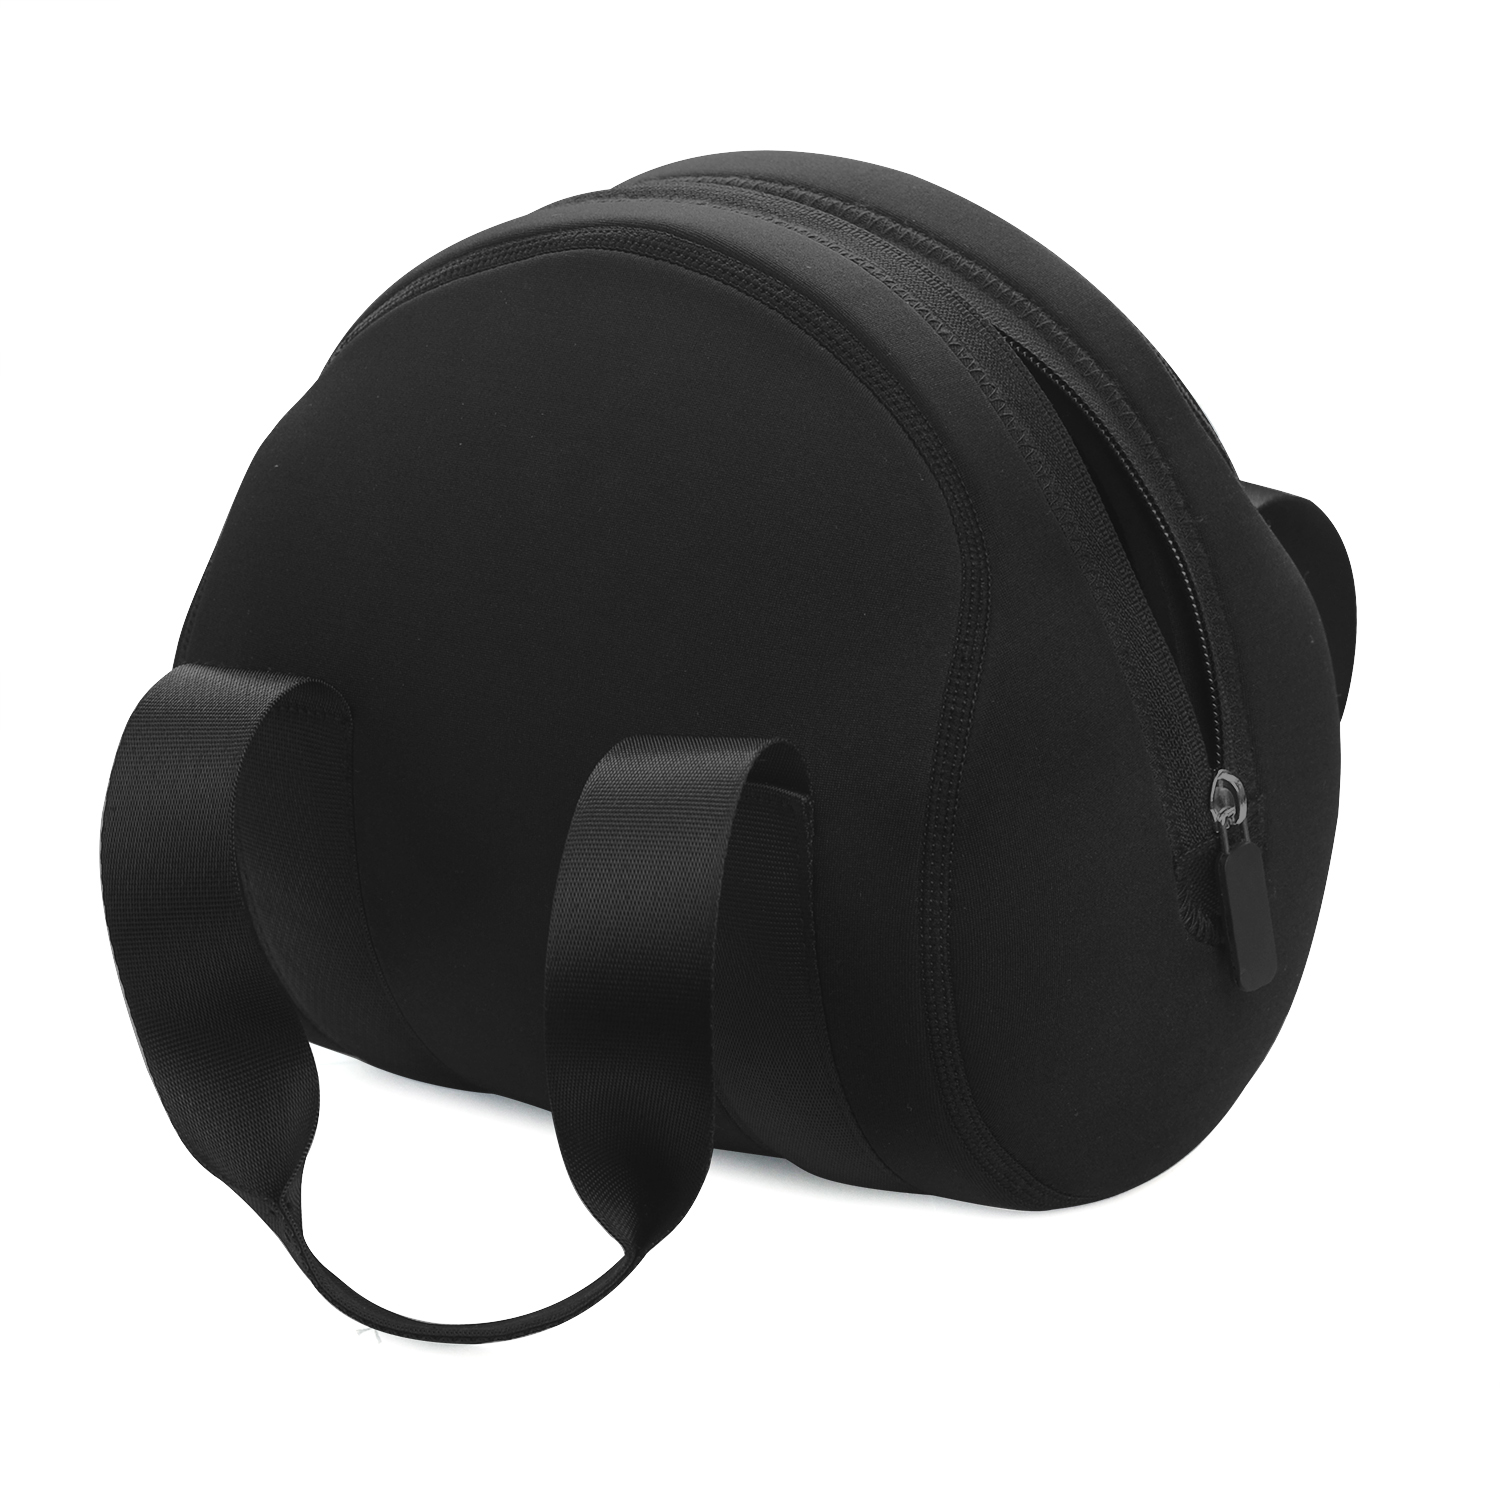 Bakeey Speaker Storage Bag Protective Cover Handbag Portable Outdoor Travel Spots Soft Carrying Bag for Apple for HomePod bluetooth Speaker